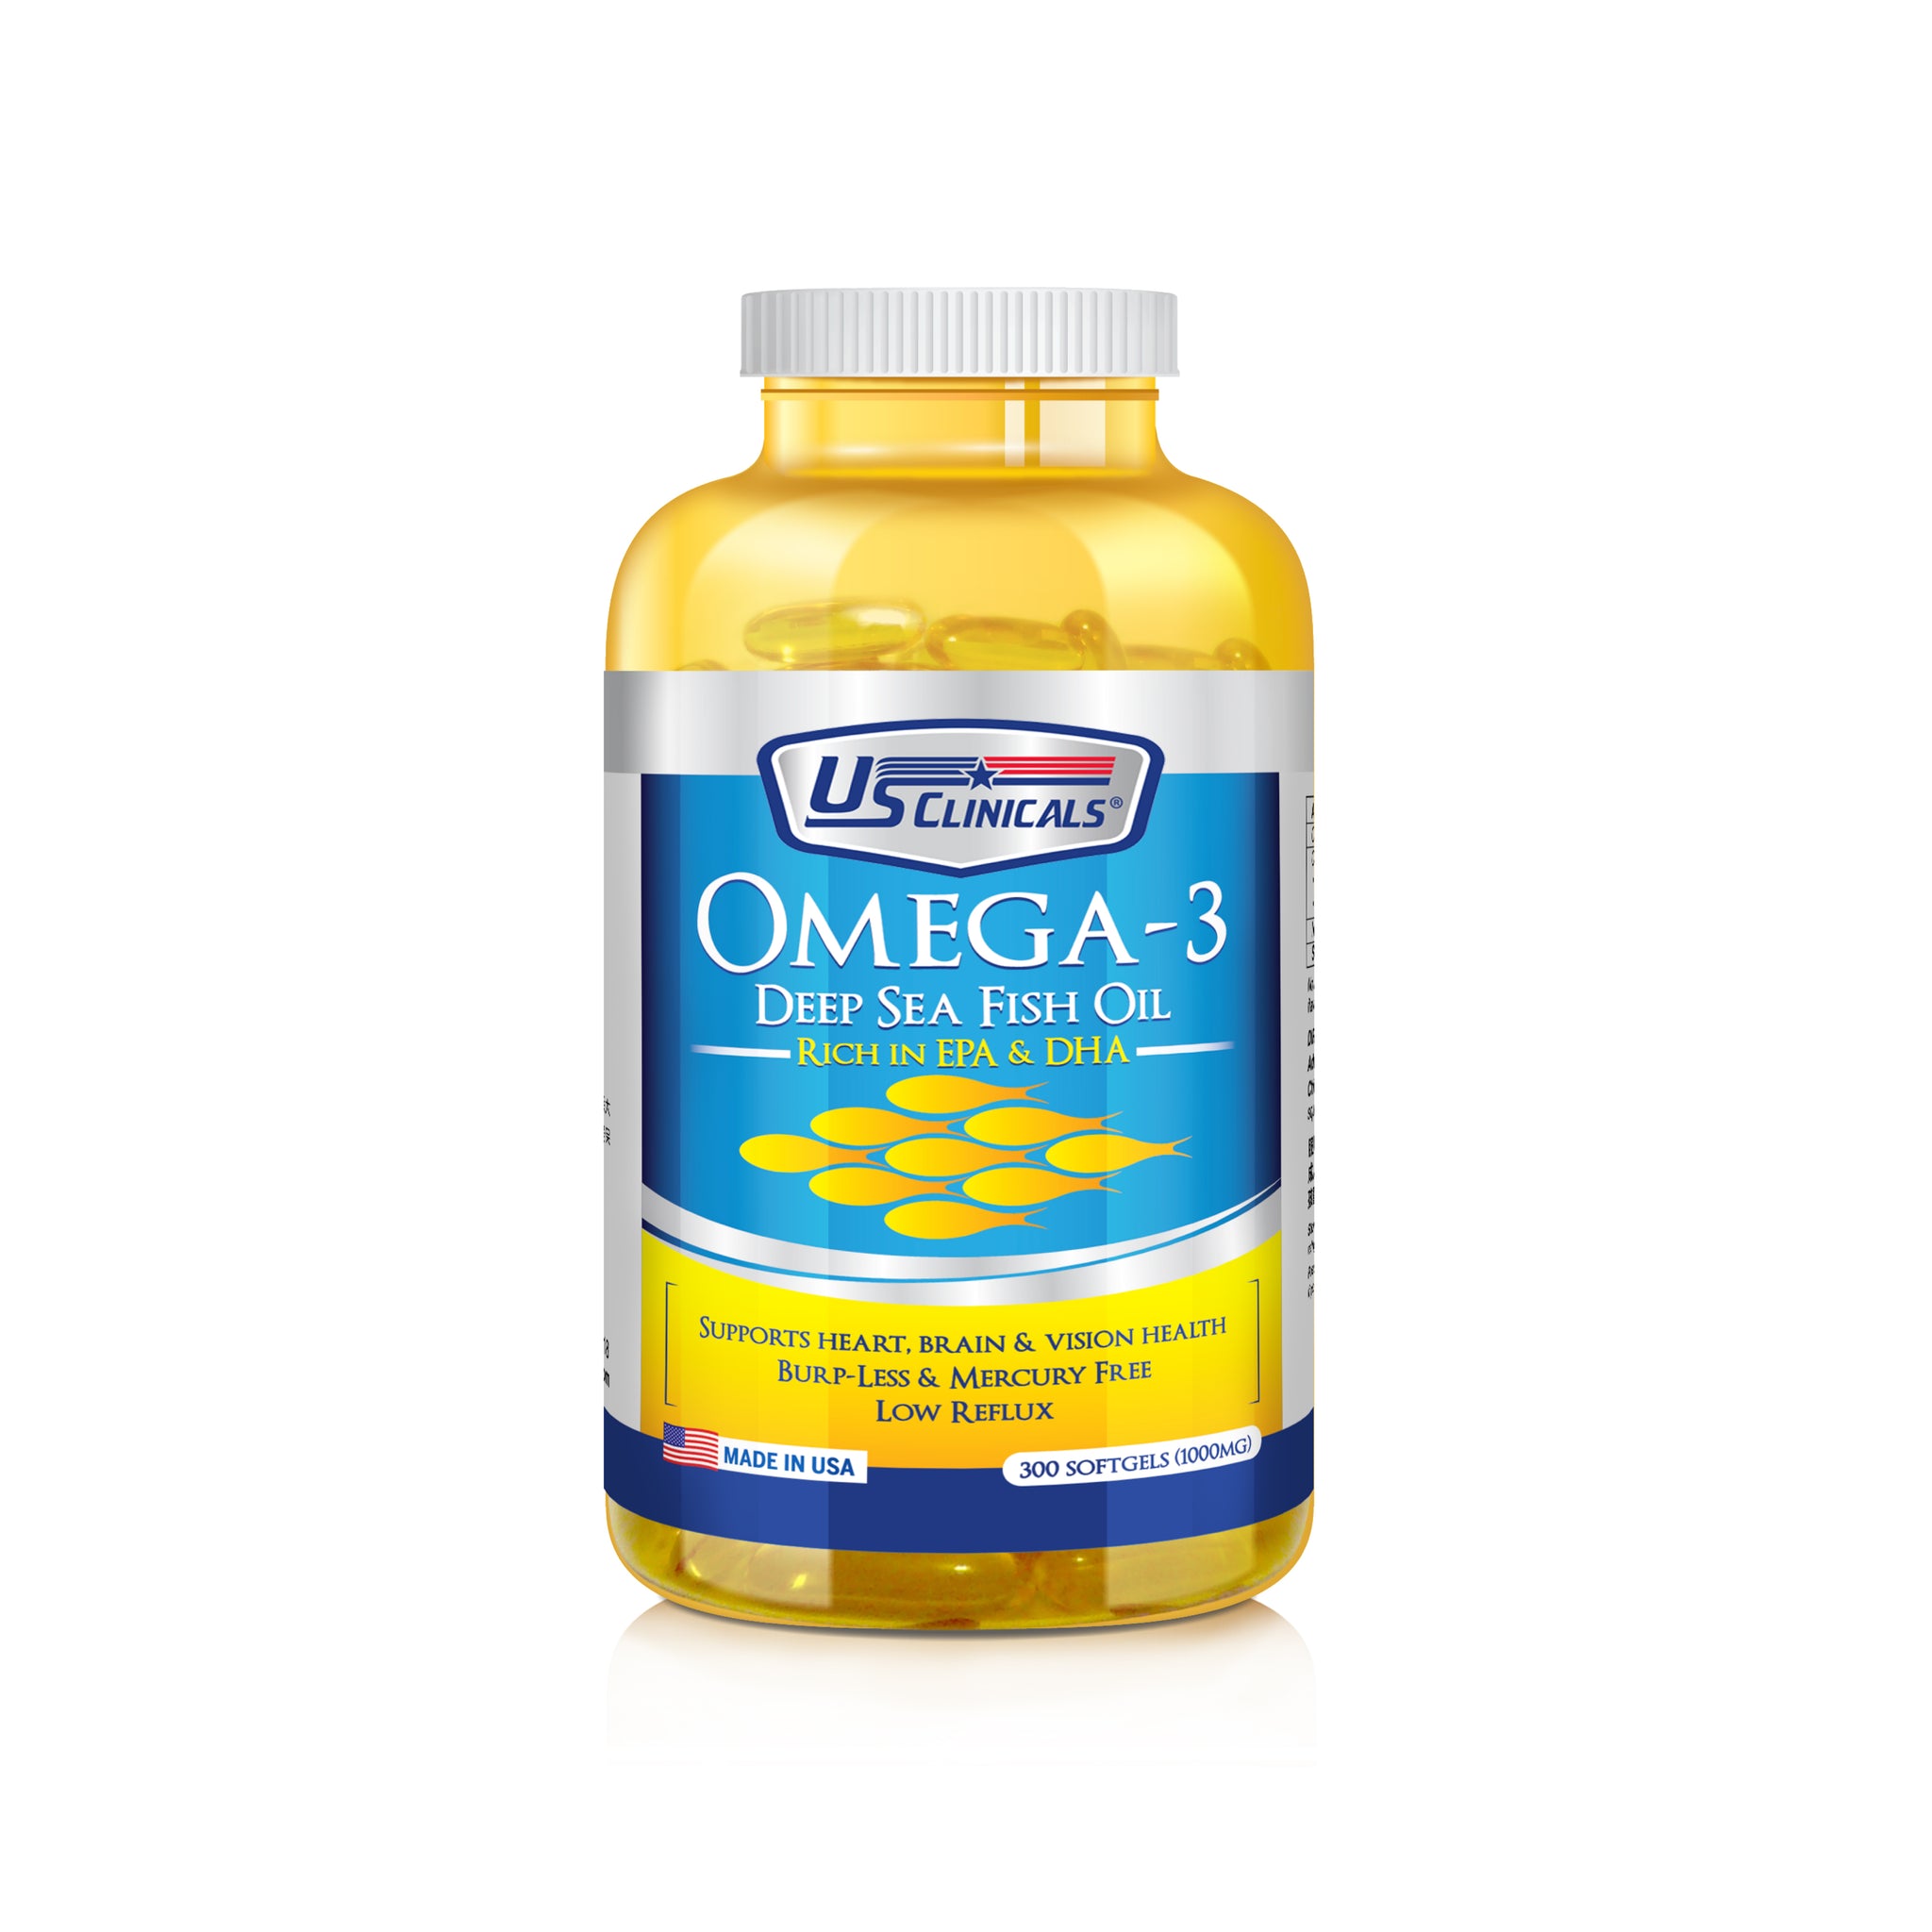 US Clinicals® Omega-3 Deep Sea Fish Oil.